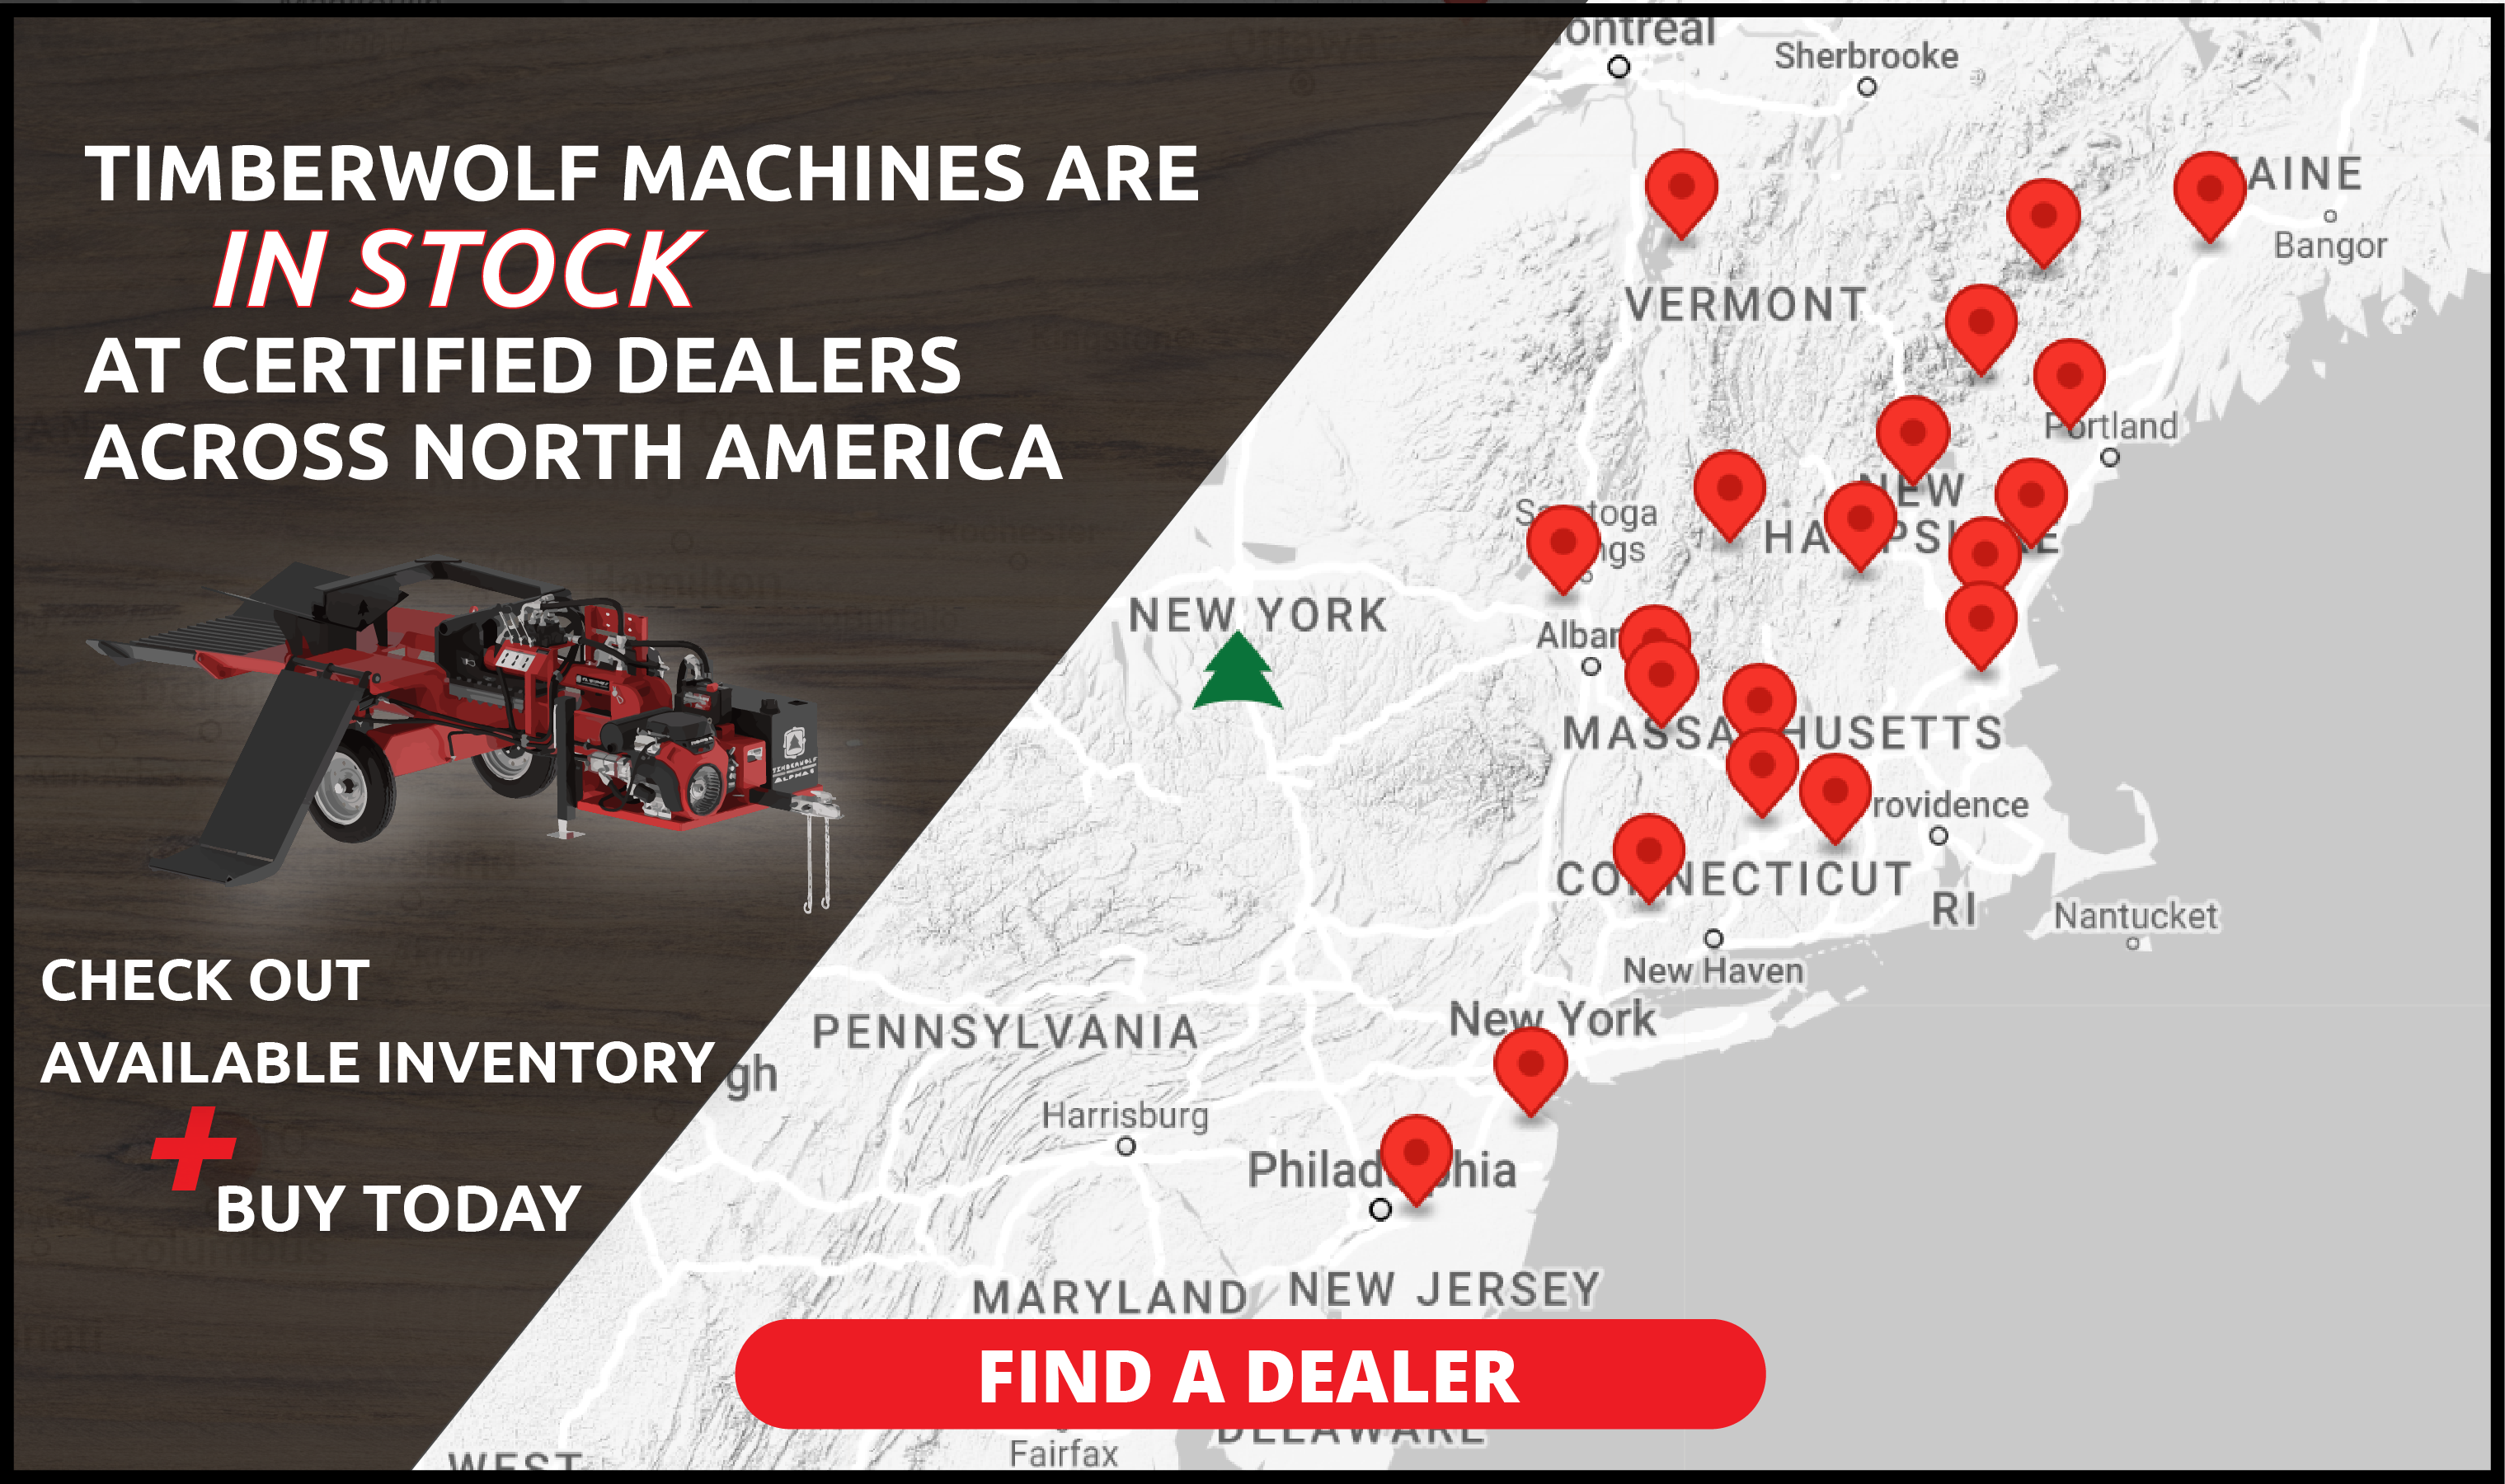 Timberwolf has certified dealers across North America